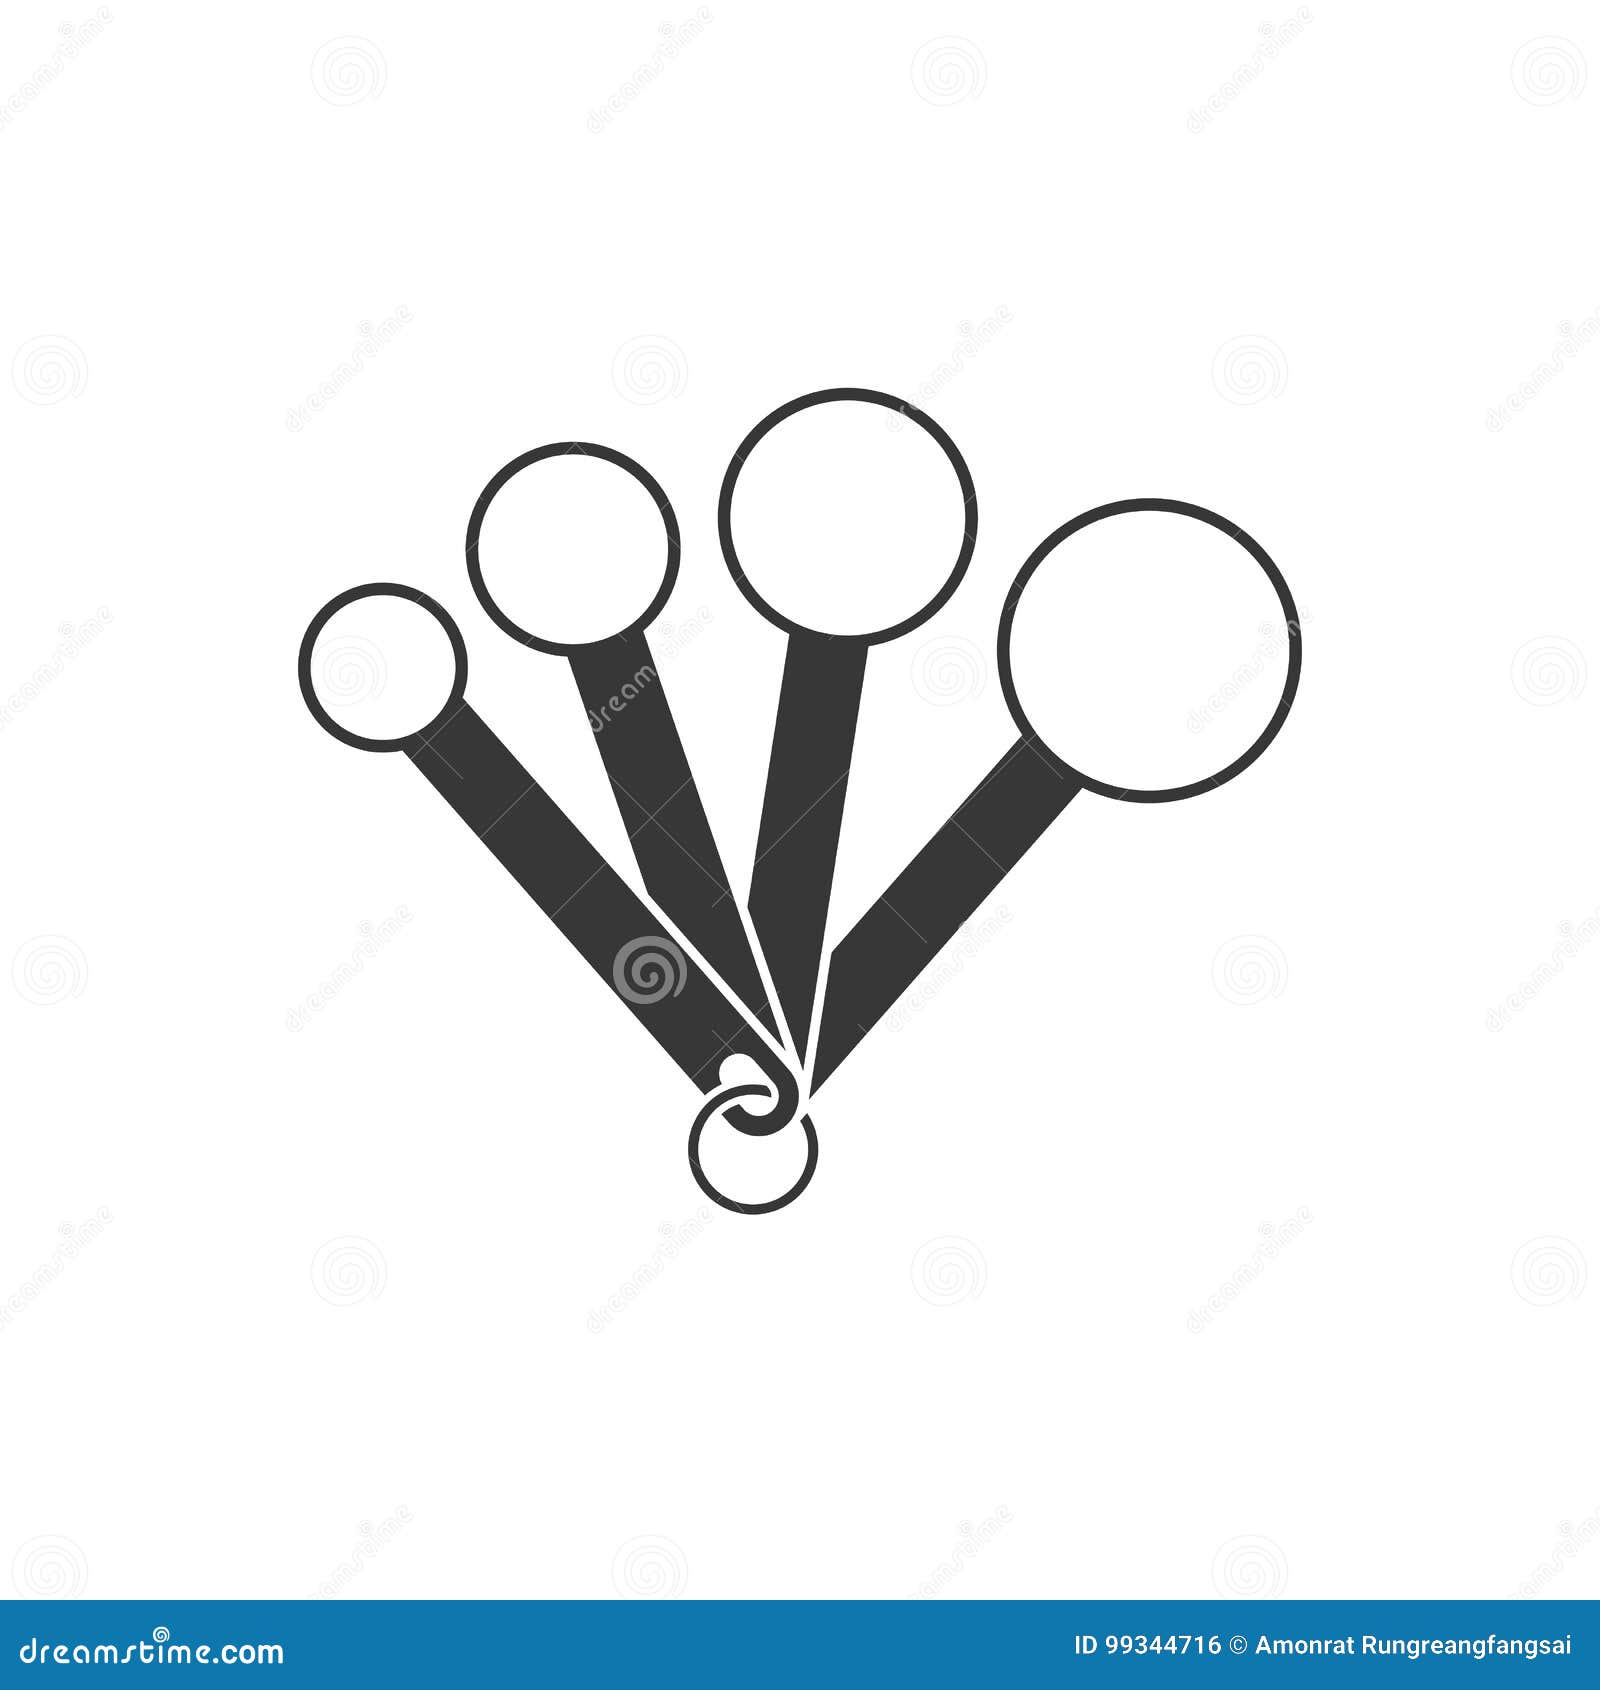 https://thumbs.dreamstime.com/z/measuring-spoon-measuring-spoon-silhouette-design-icon-99344716.jpg